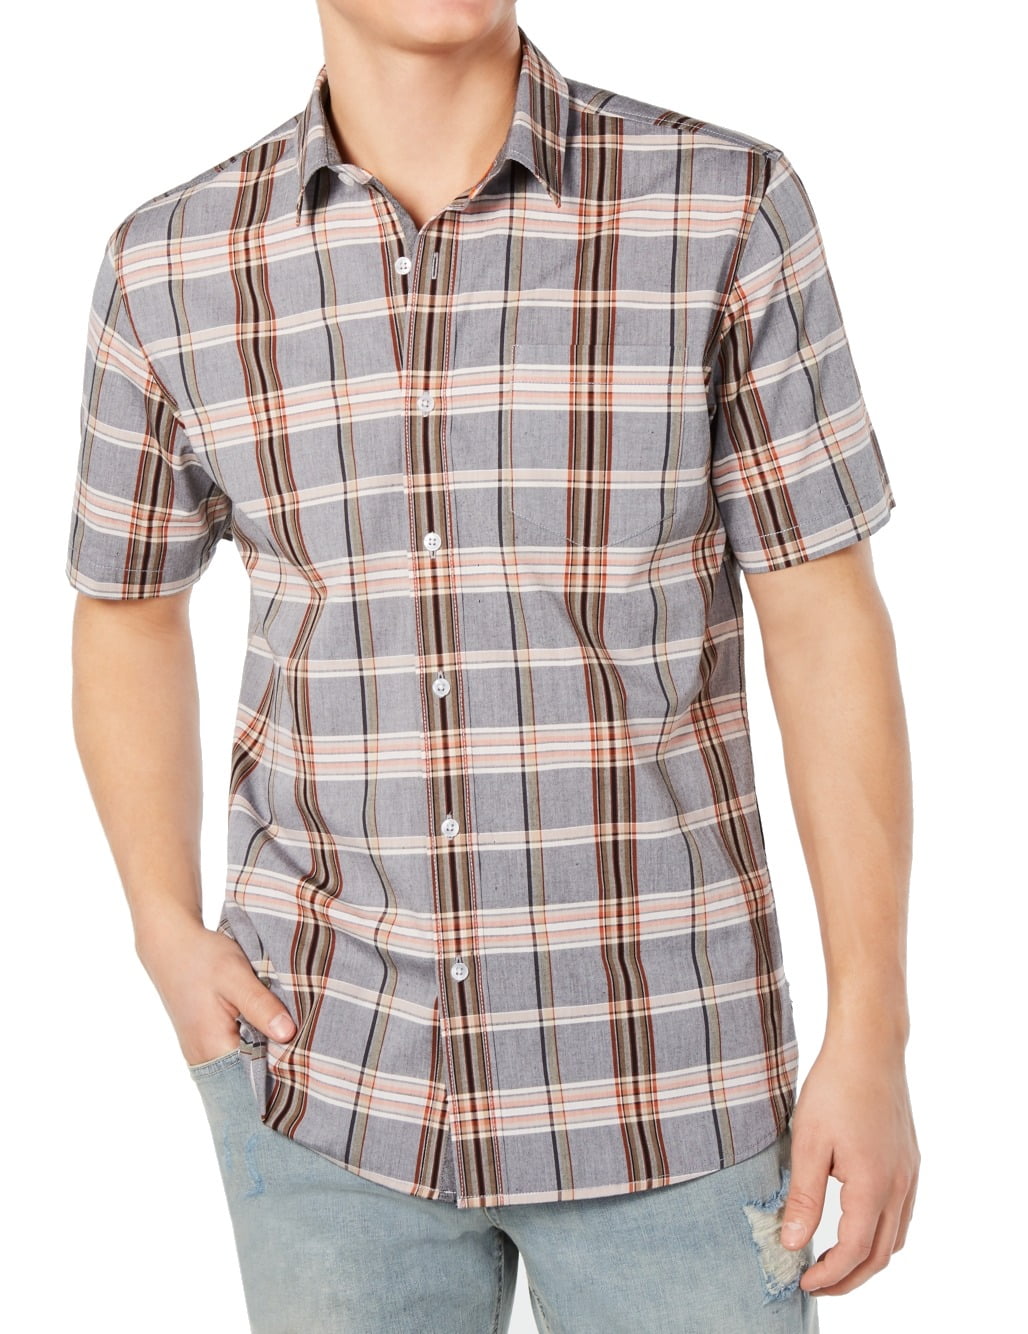 American Rag - Mens Shirt Large Button Down Plaid Short-Sleeve L ...